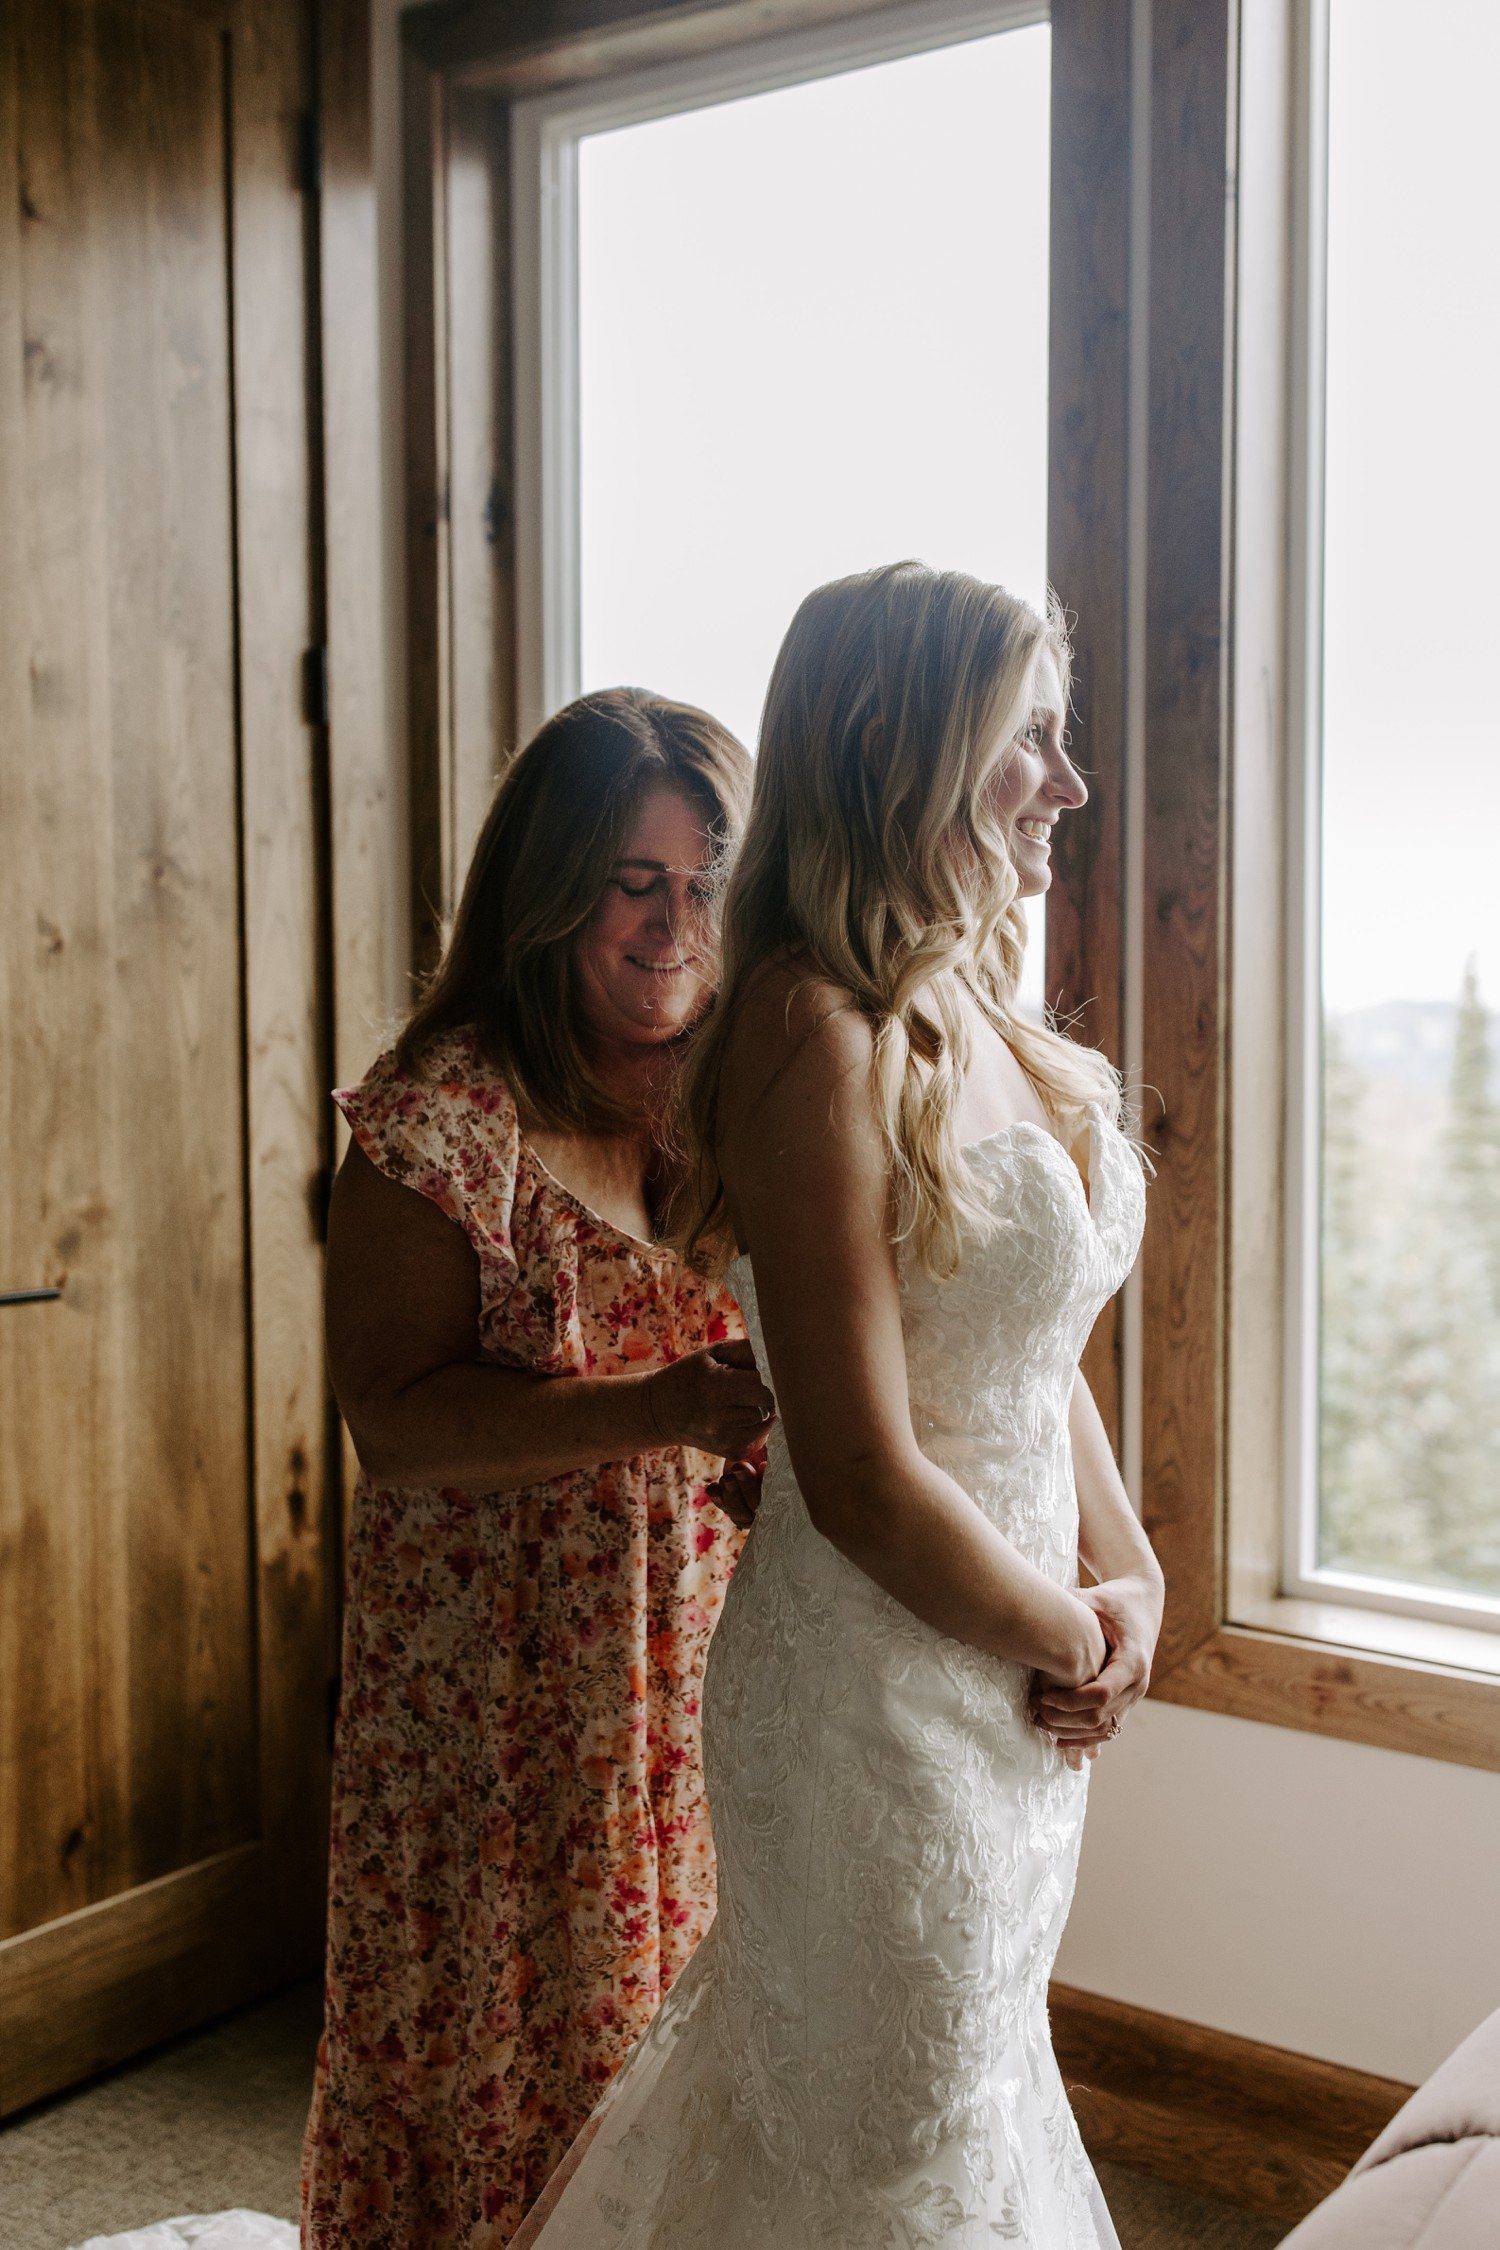 Mom zipping up bride in dress in airbnb in Utah.